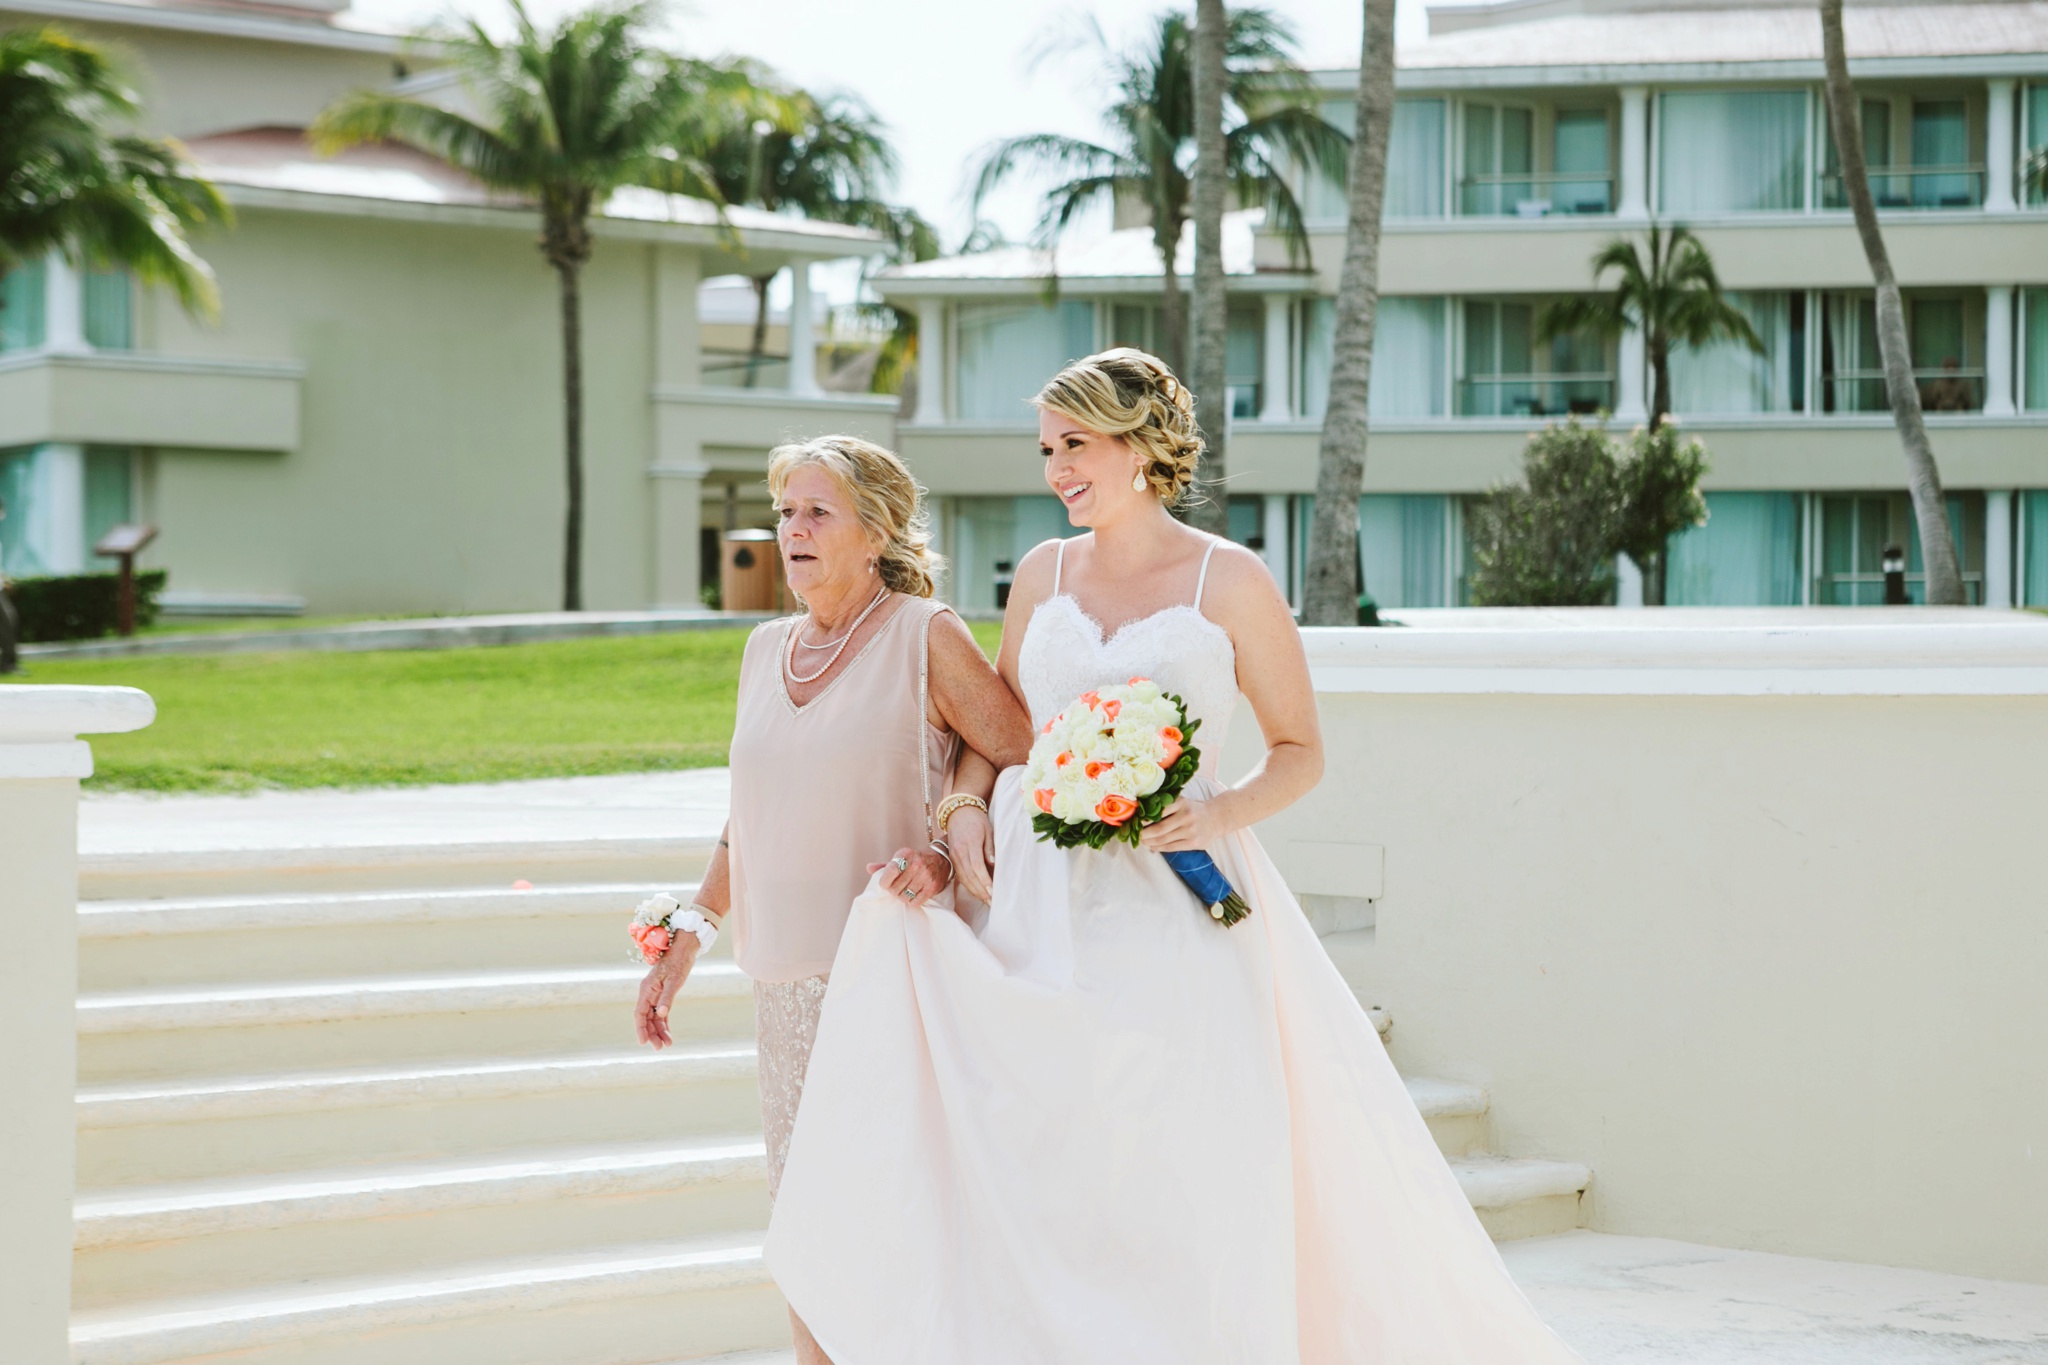 Moon Palace Resort Cancun Mexico Wedding Photos Bride Walking Down Aisle